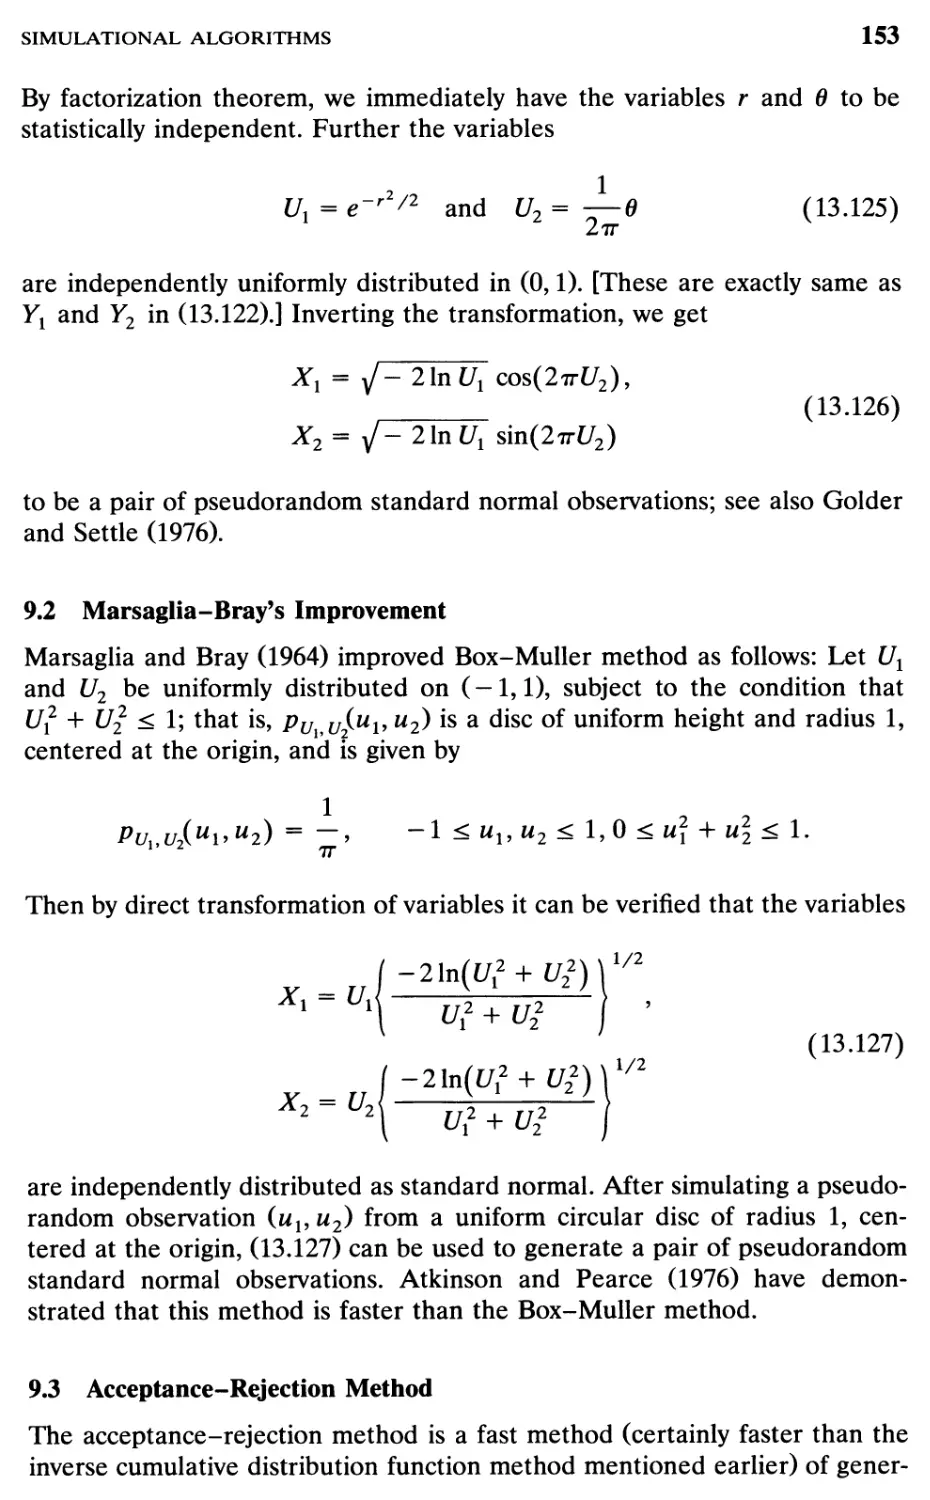 9.2 Marsaglia-Bray’s Improvement, 153
9.3 Acceptance-Rejection Method, 153